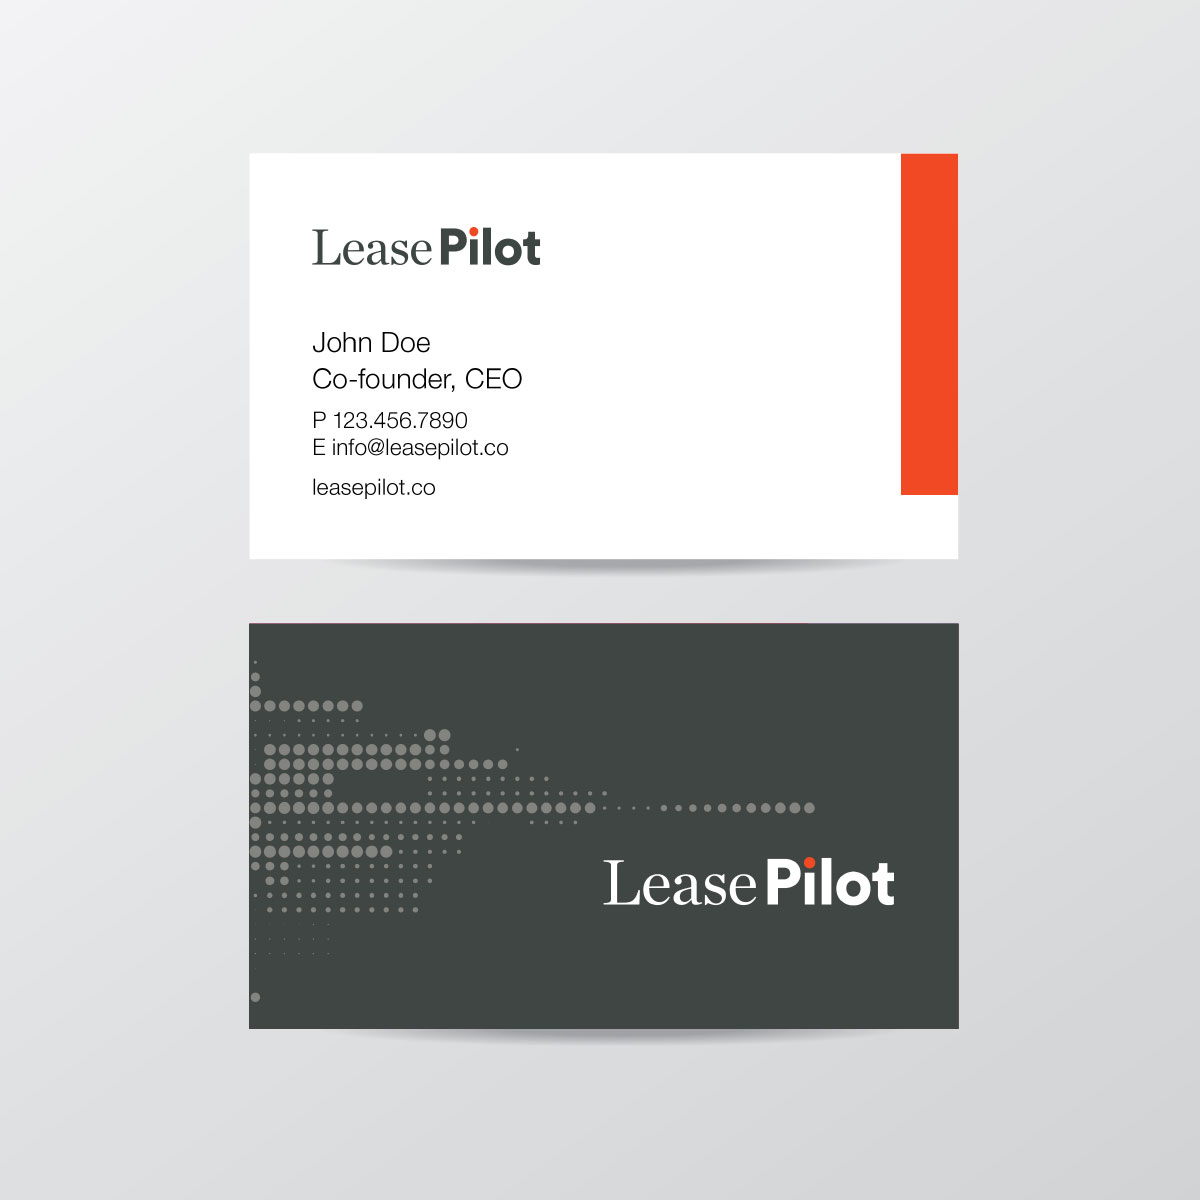 LeasePilot Brand Identity – Business Card Design